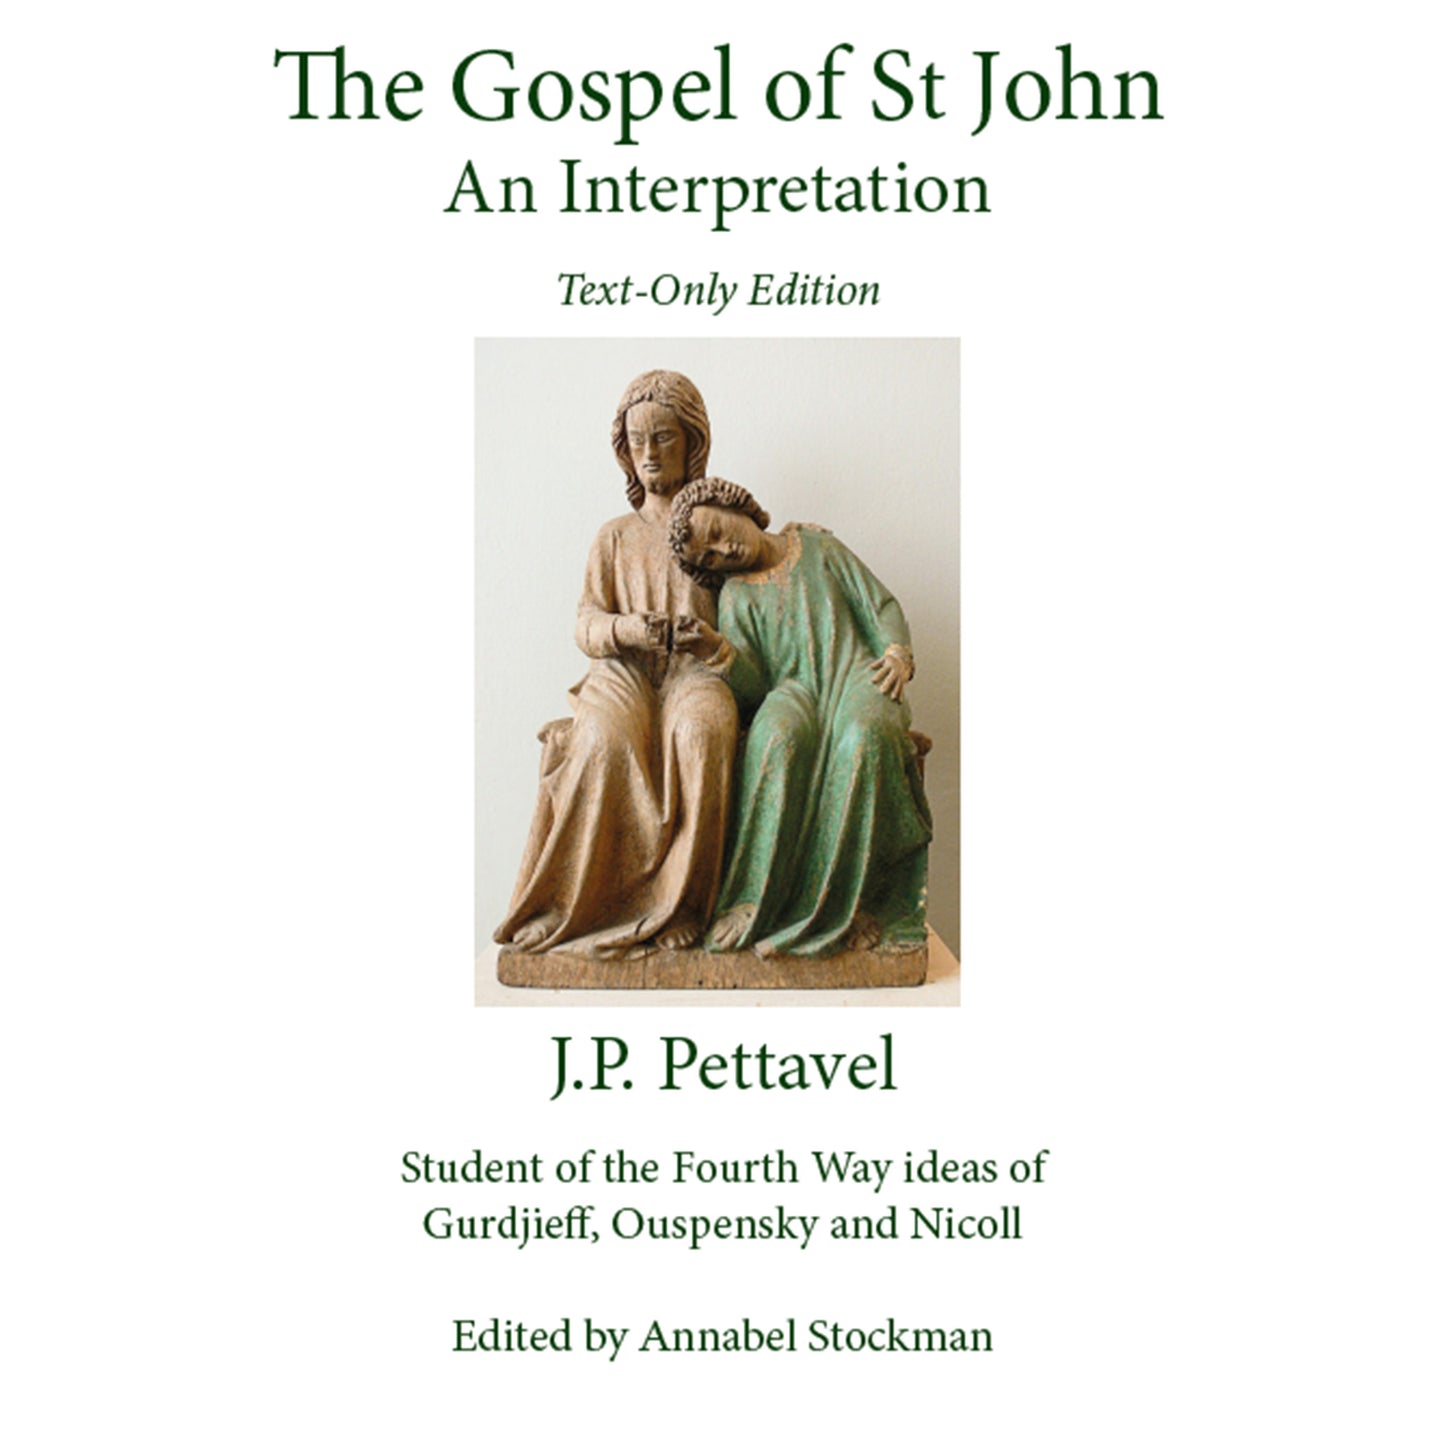 The Gospel Of St John, An Interpretation TEXT-ONLY Edition, J.P. Pettavel